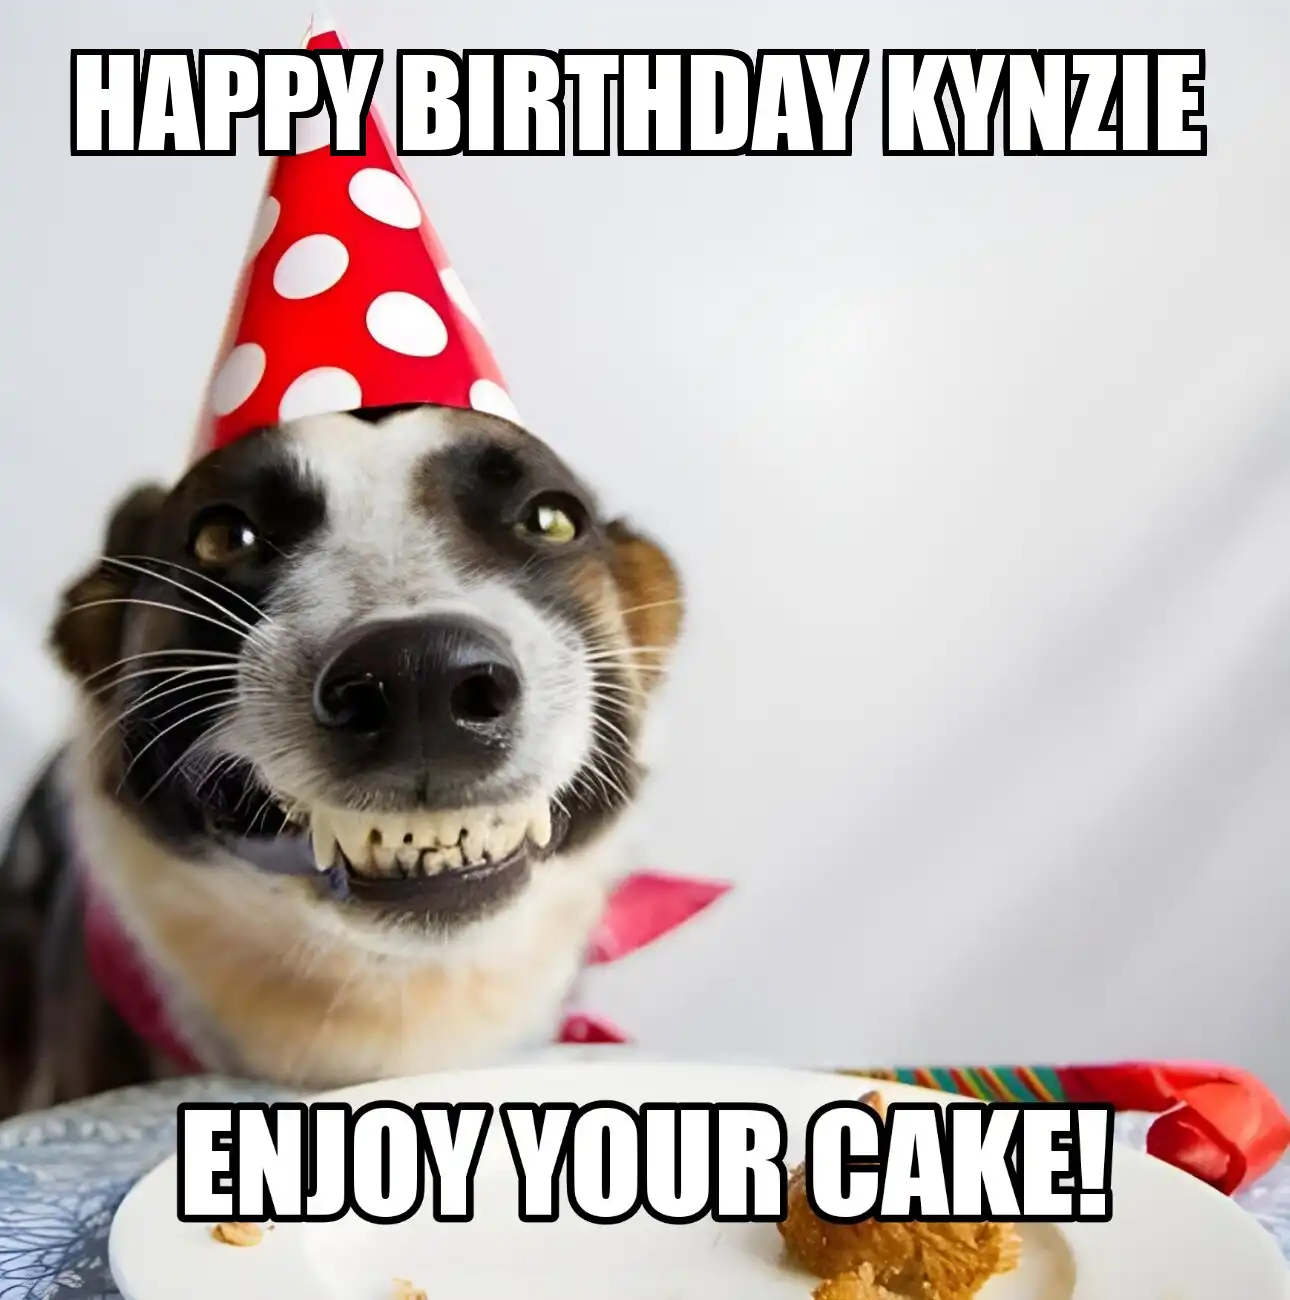 Happy Birthday Kynzie Enjoy Your Cake Dog Meme